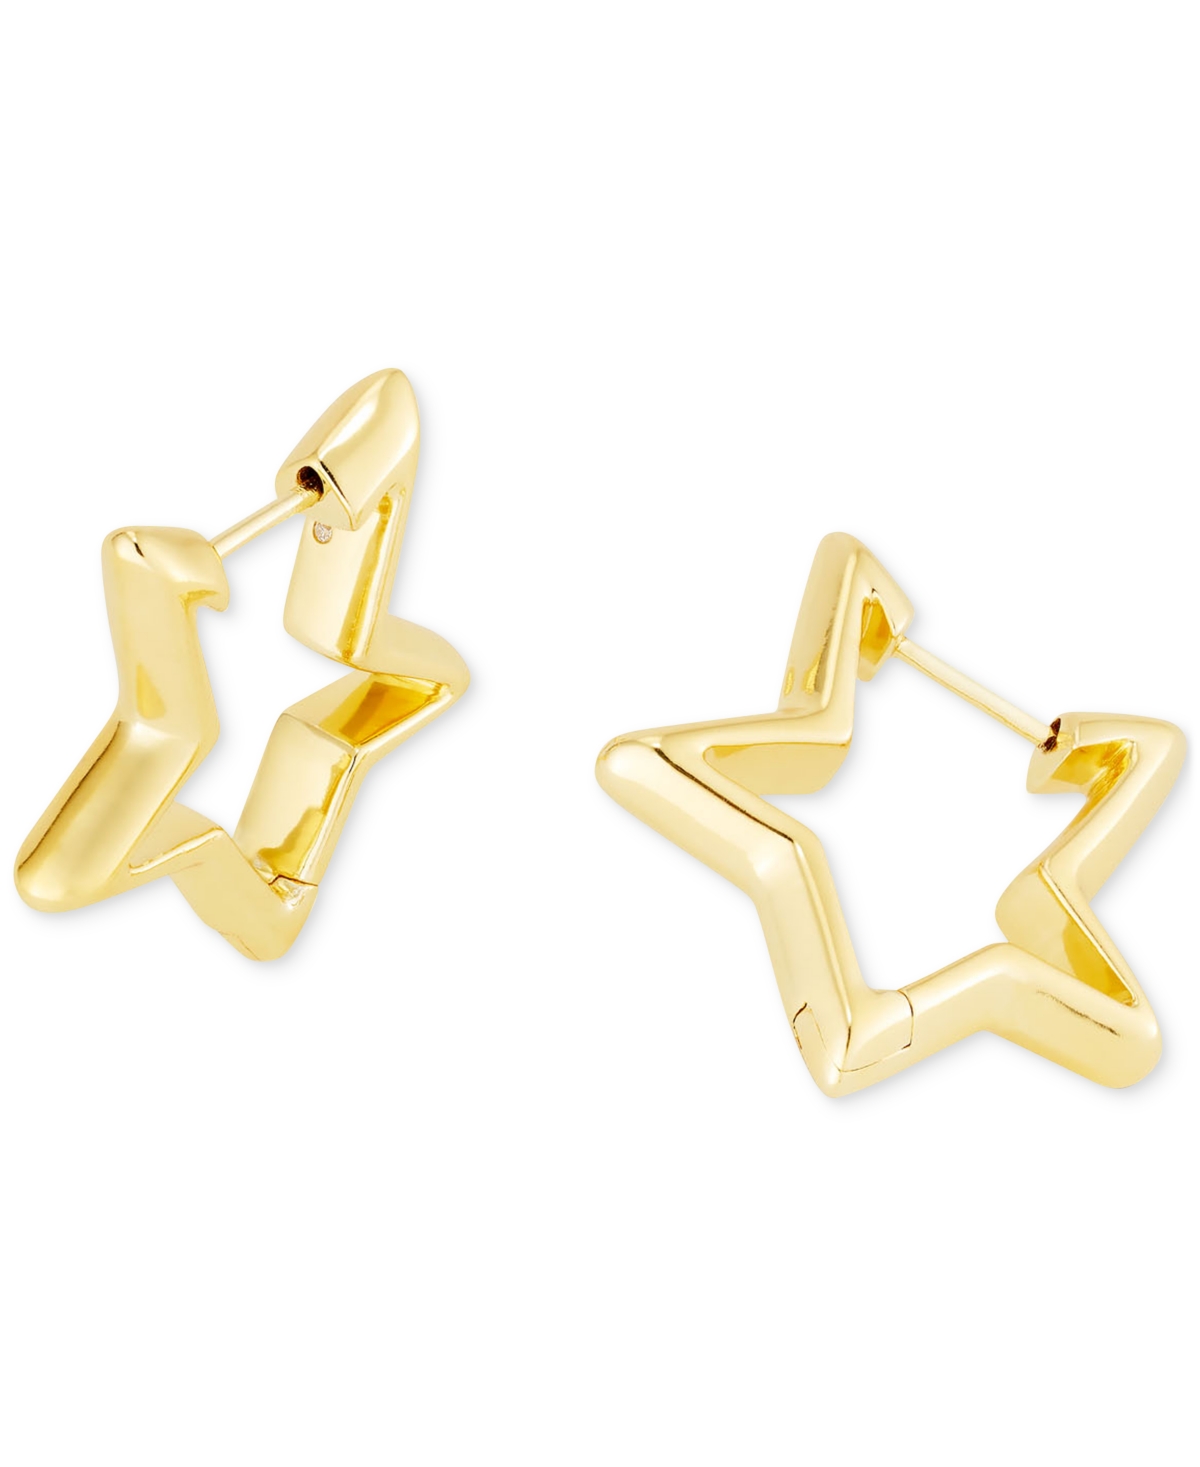 Kendra Scott 14k Gold-plated Small Star Huggie Hoop Earrings, 0.88"